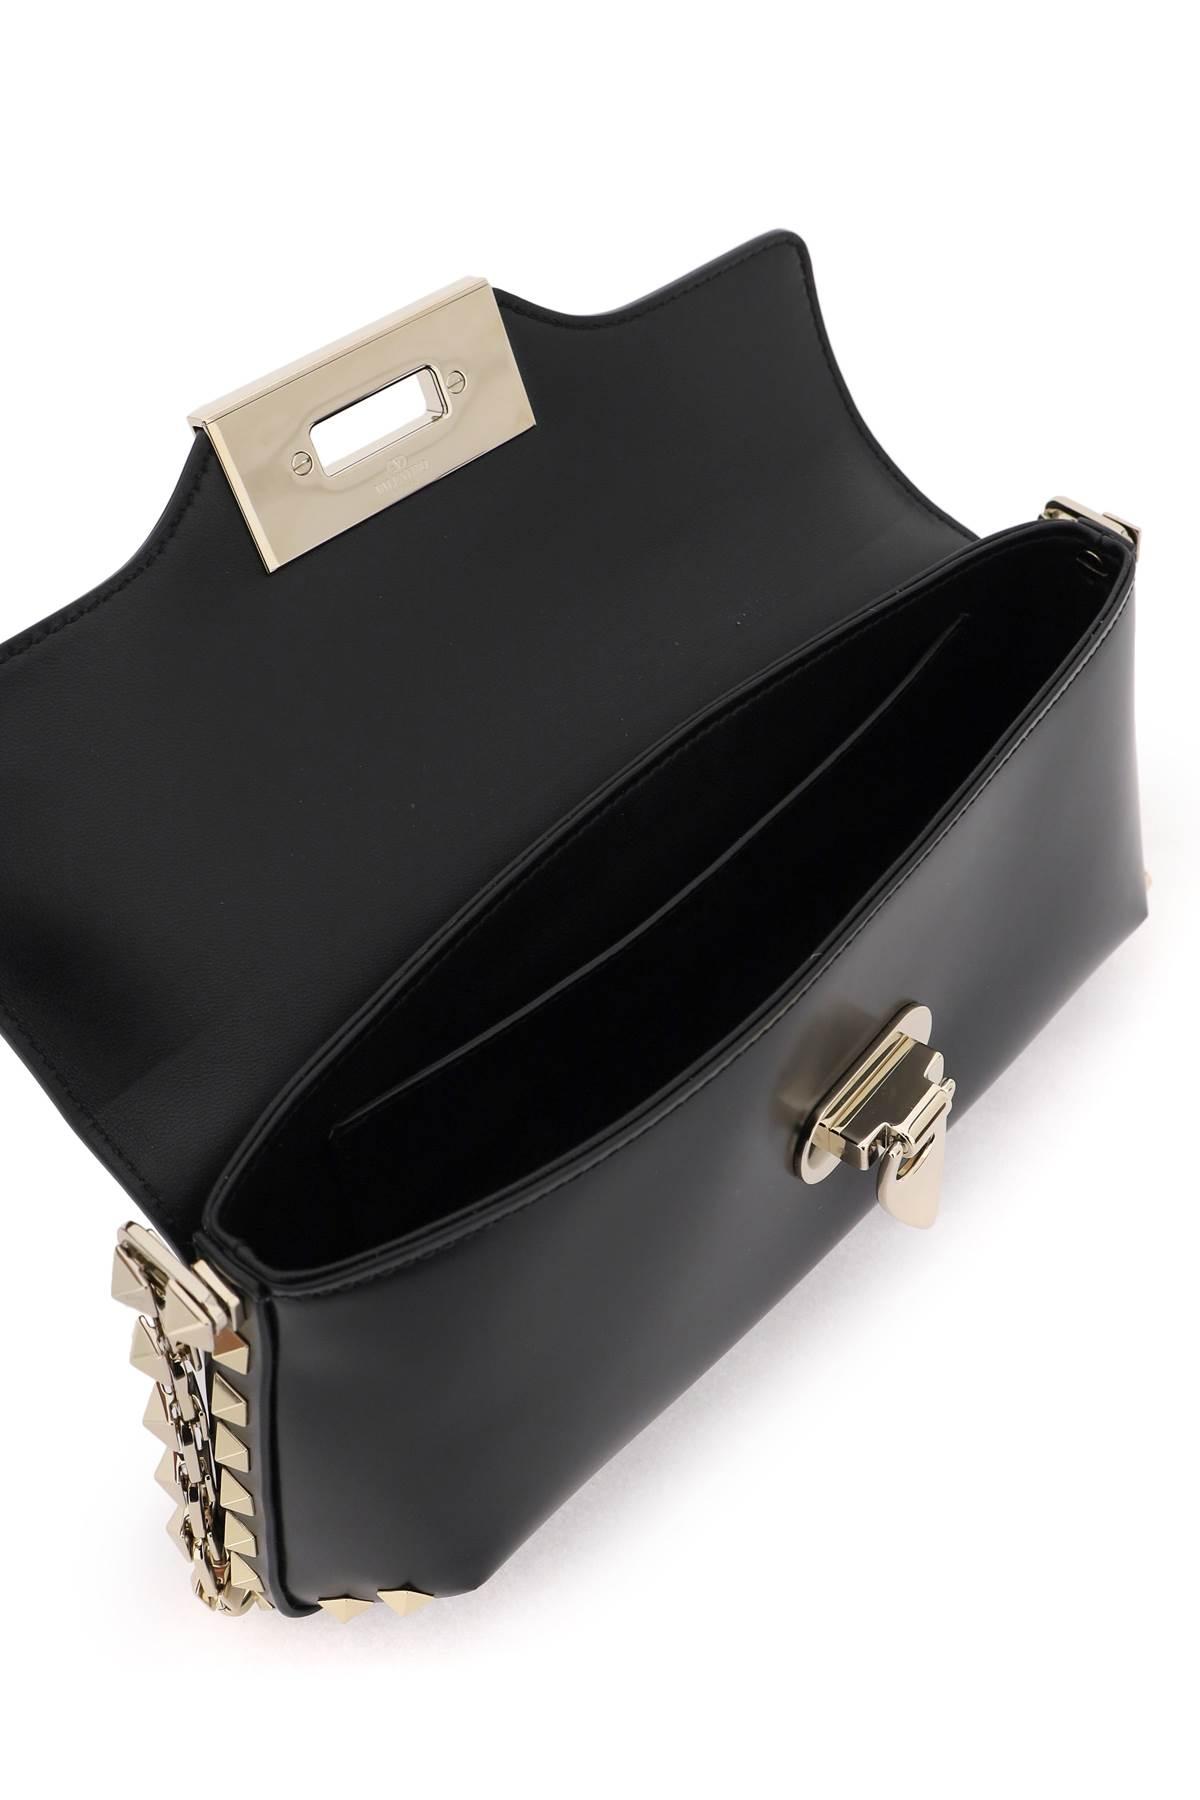 Valentino Garavani Rockstud leather shoulder bag - 0NO NERO